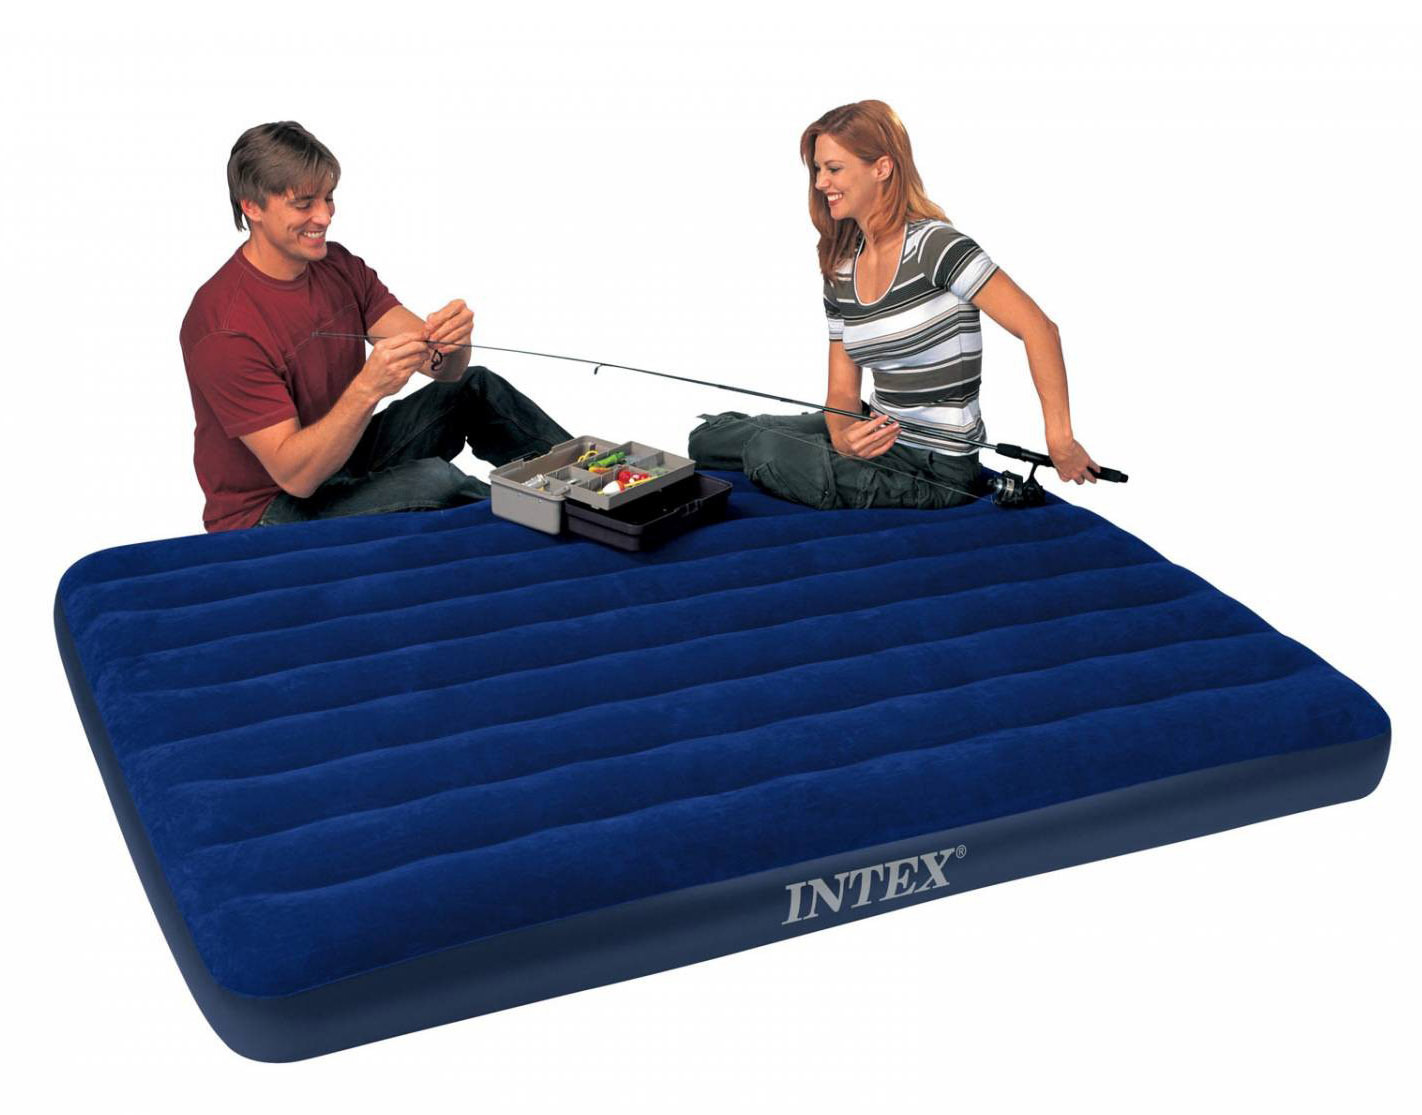 intex inflatable queen mattress air bed review